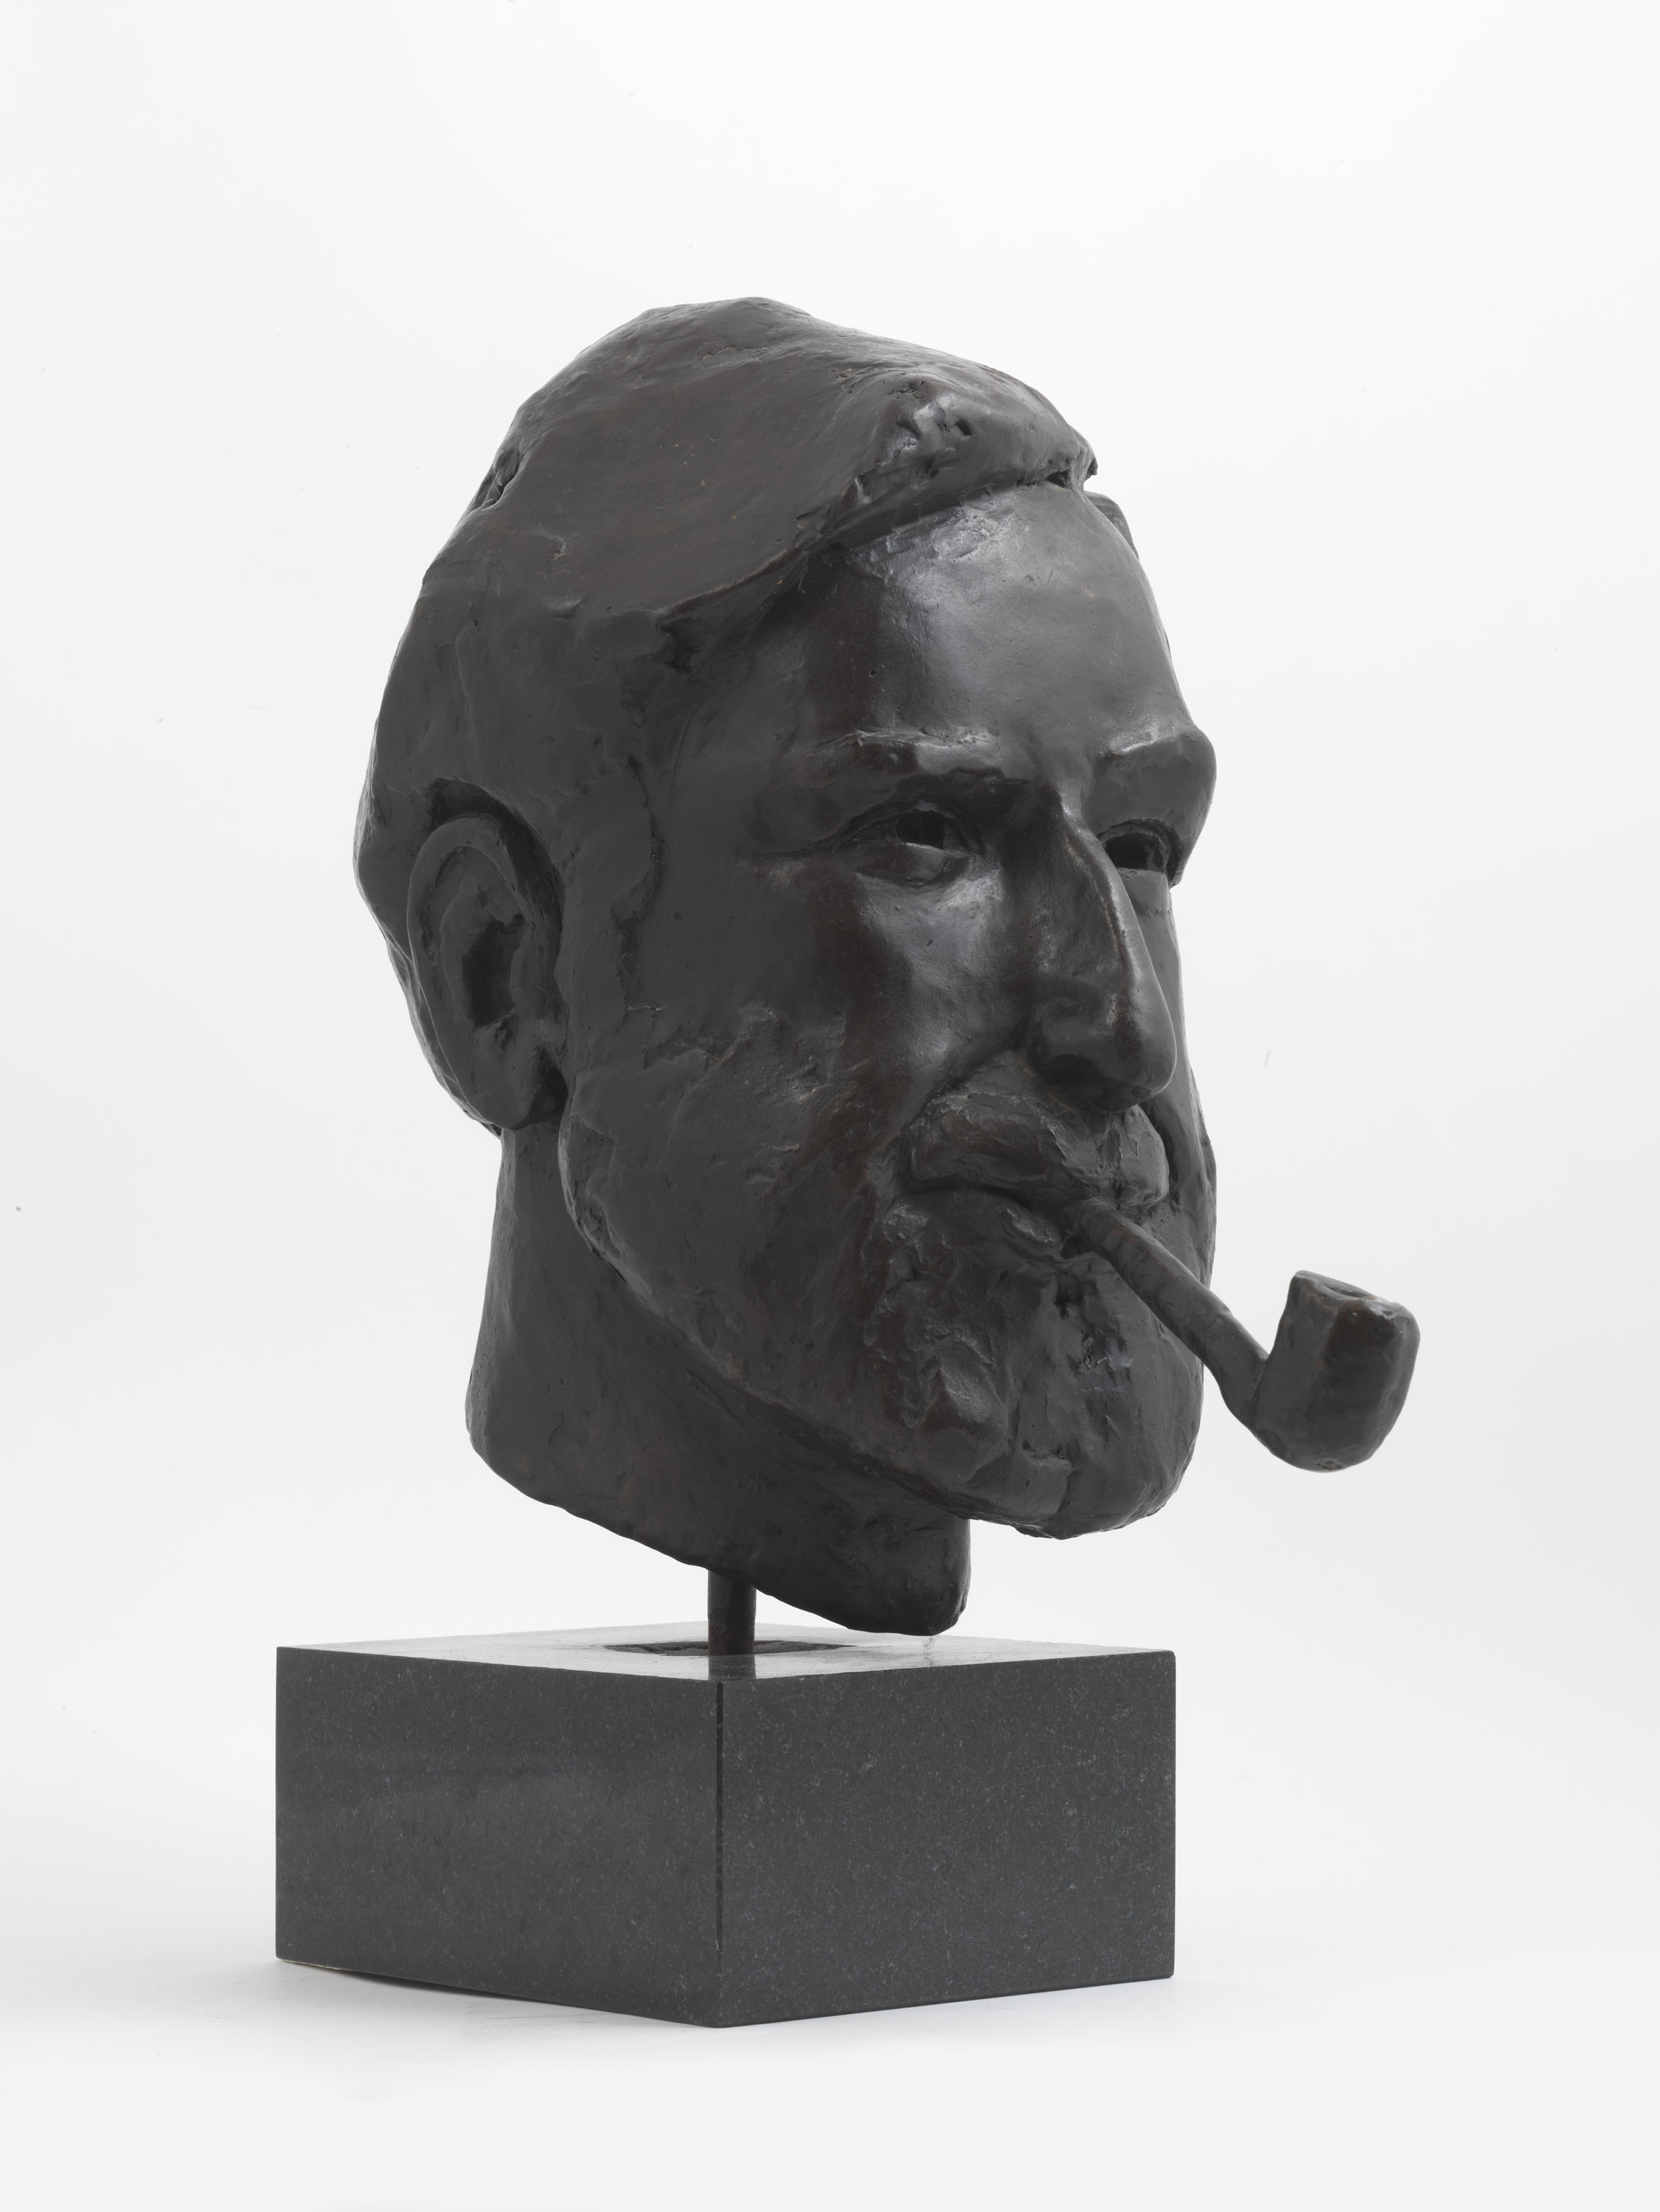 John Bramley Portrait (Bronze) by Julia Godsiff